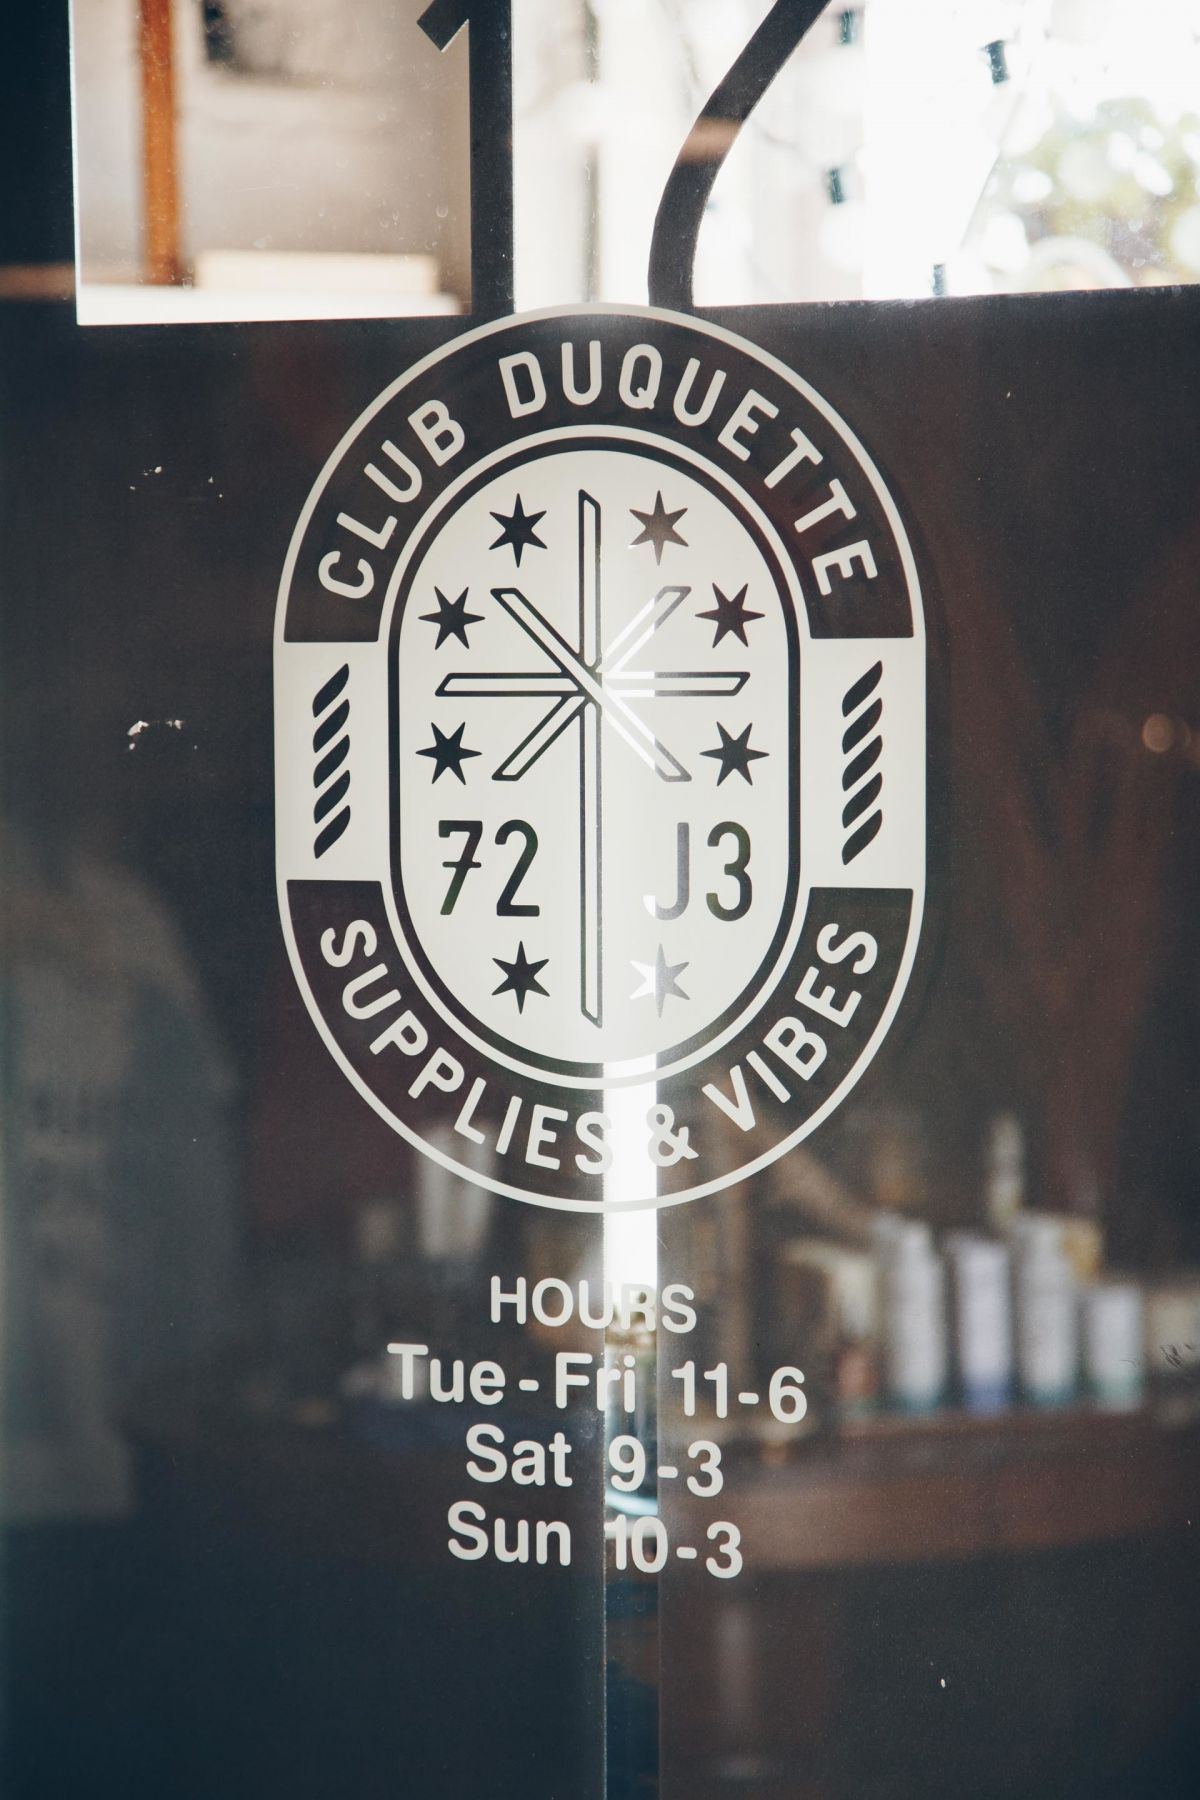 Club Duquette